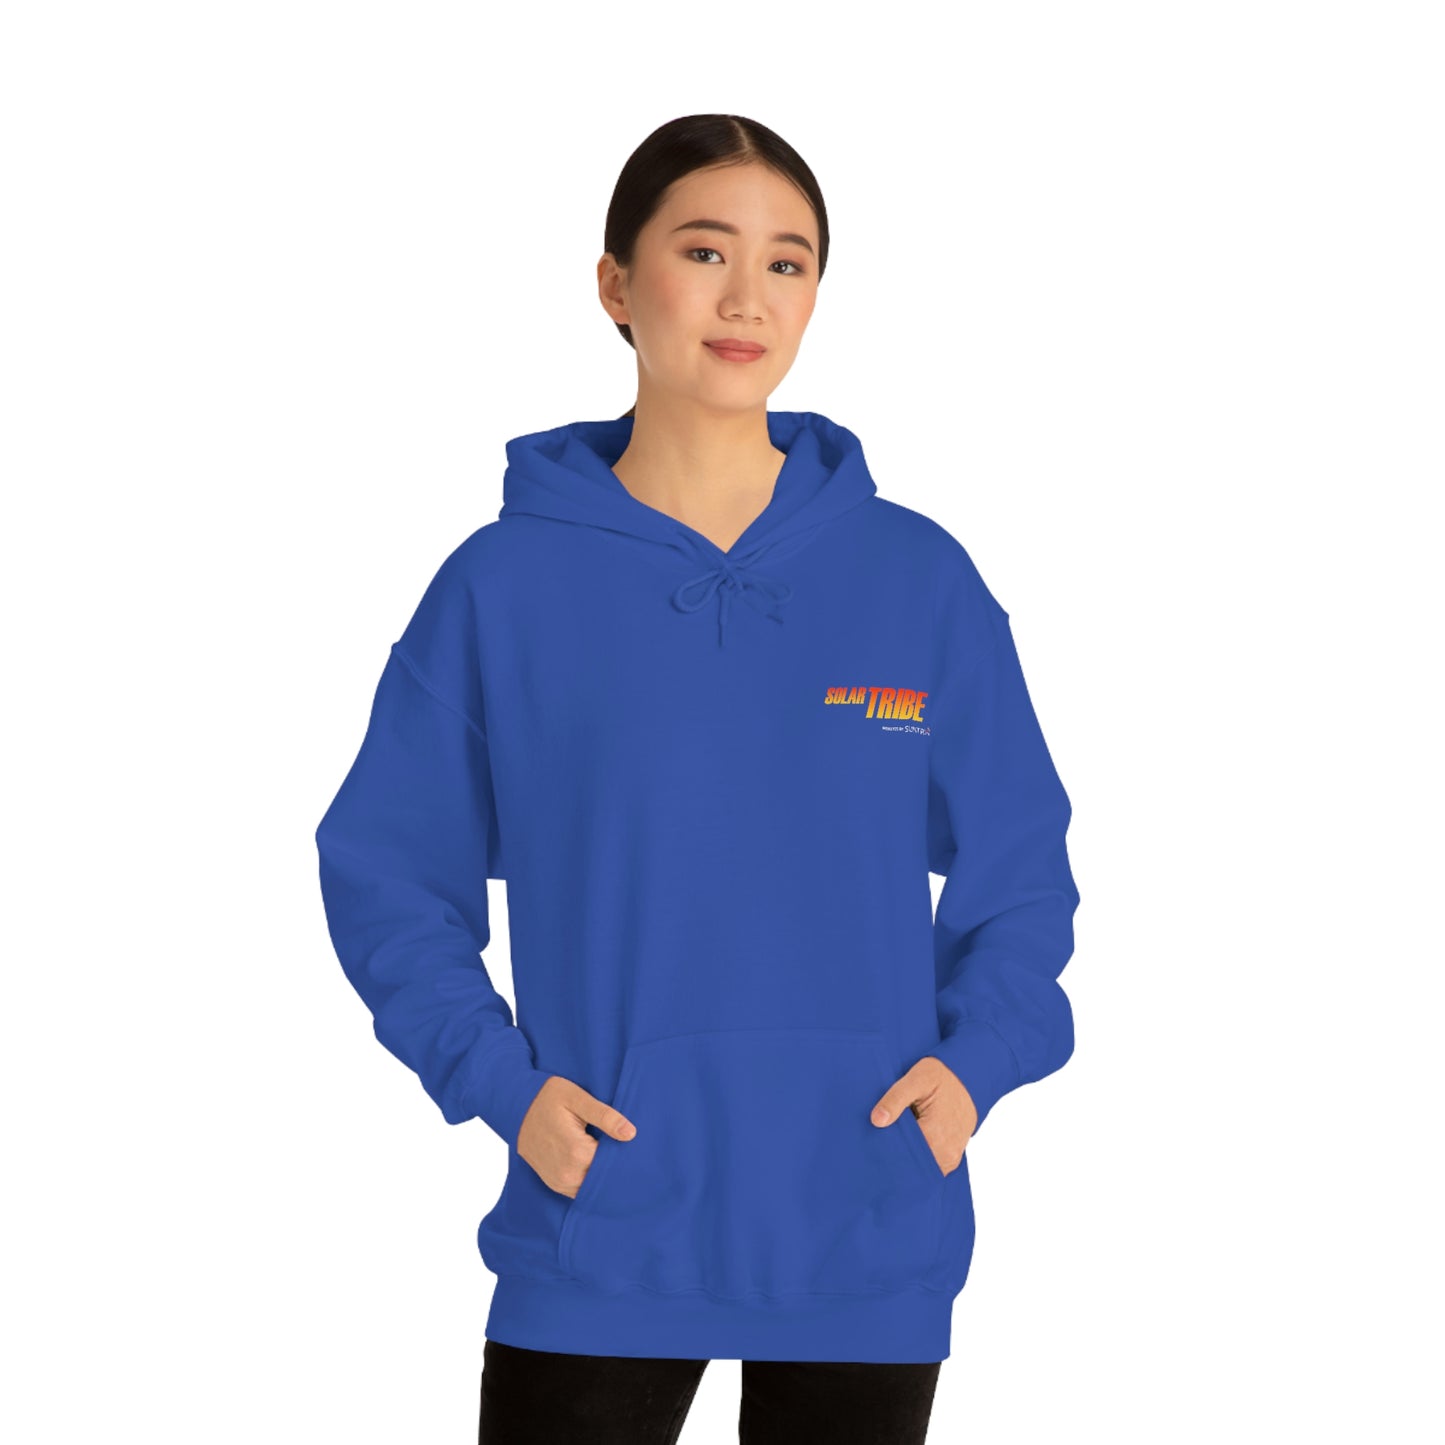 Solar Tribe Unisex Heavy Blend™ Hooded Sweatshirt